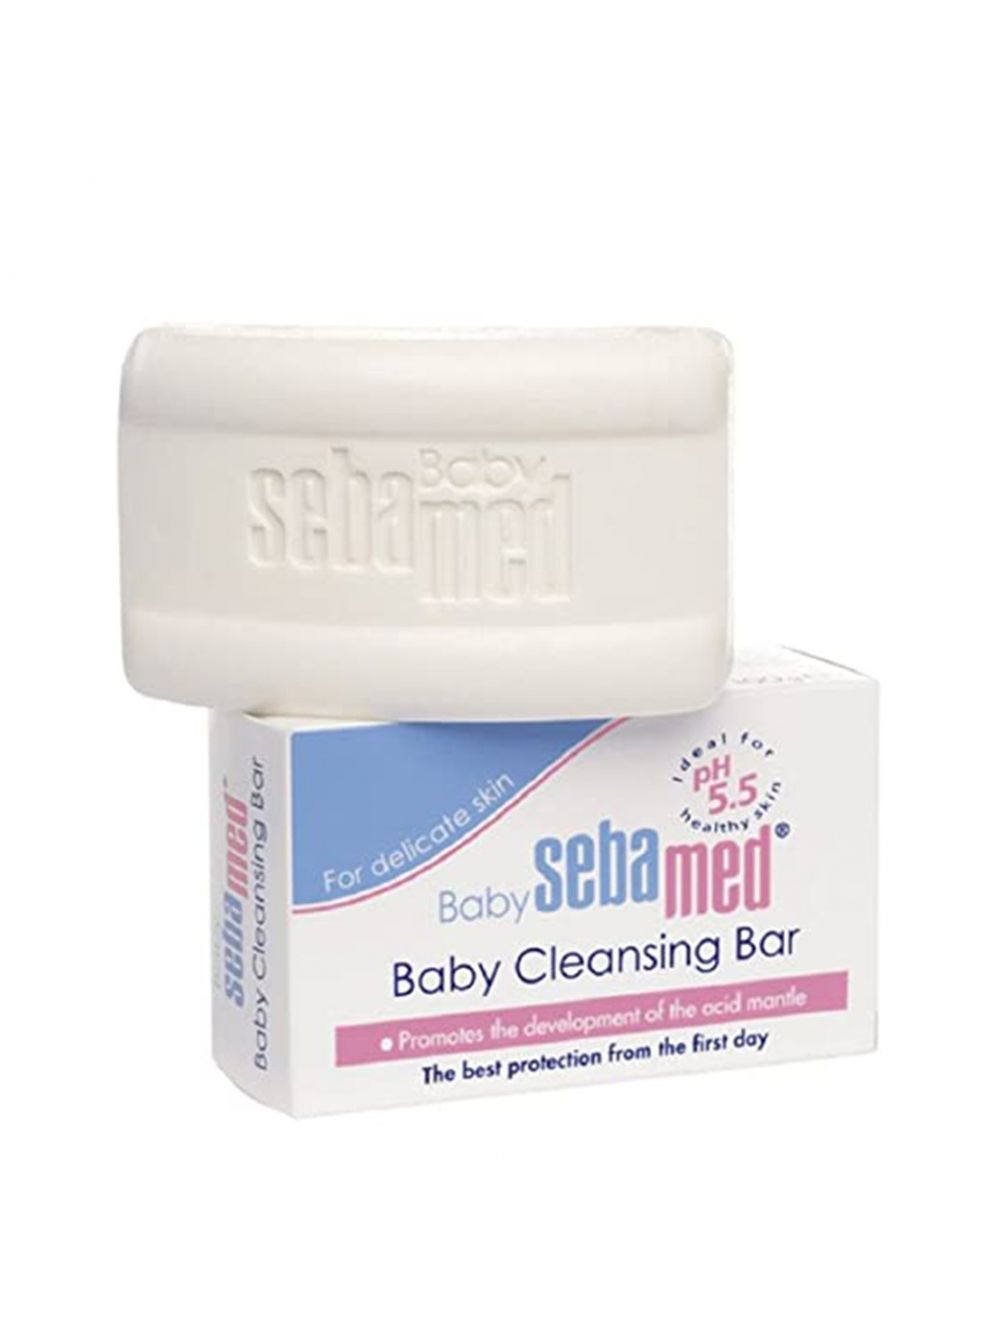 Sebamed Baby Protective Facial Cream ph 5.5 (50ml) - Niram